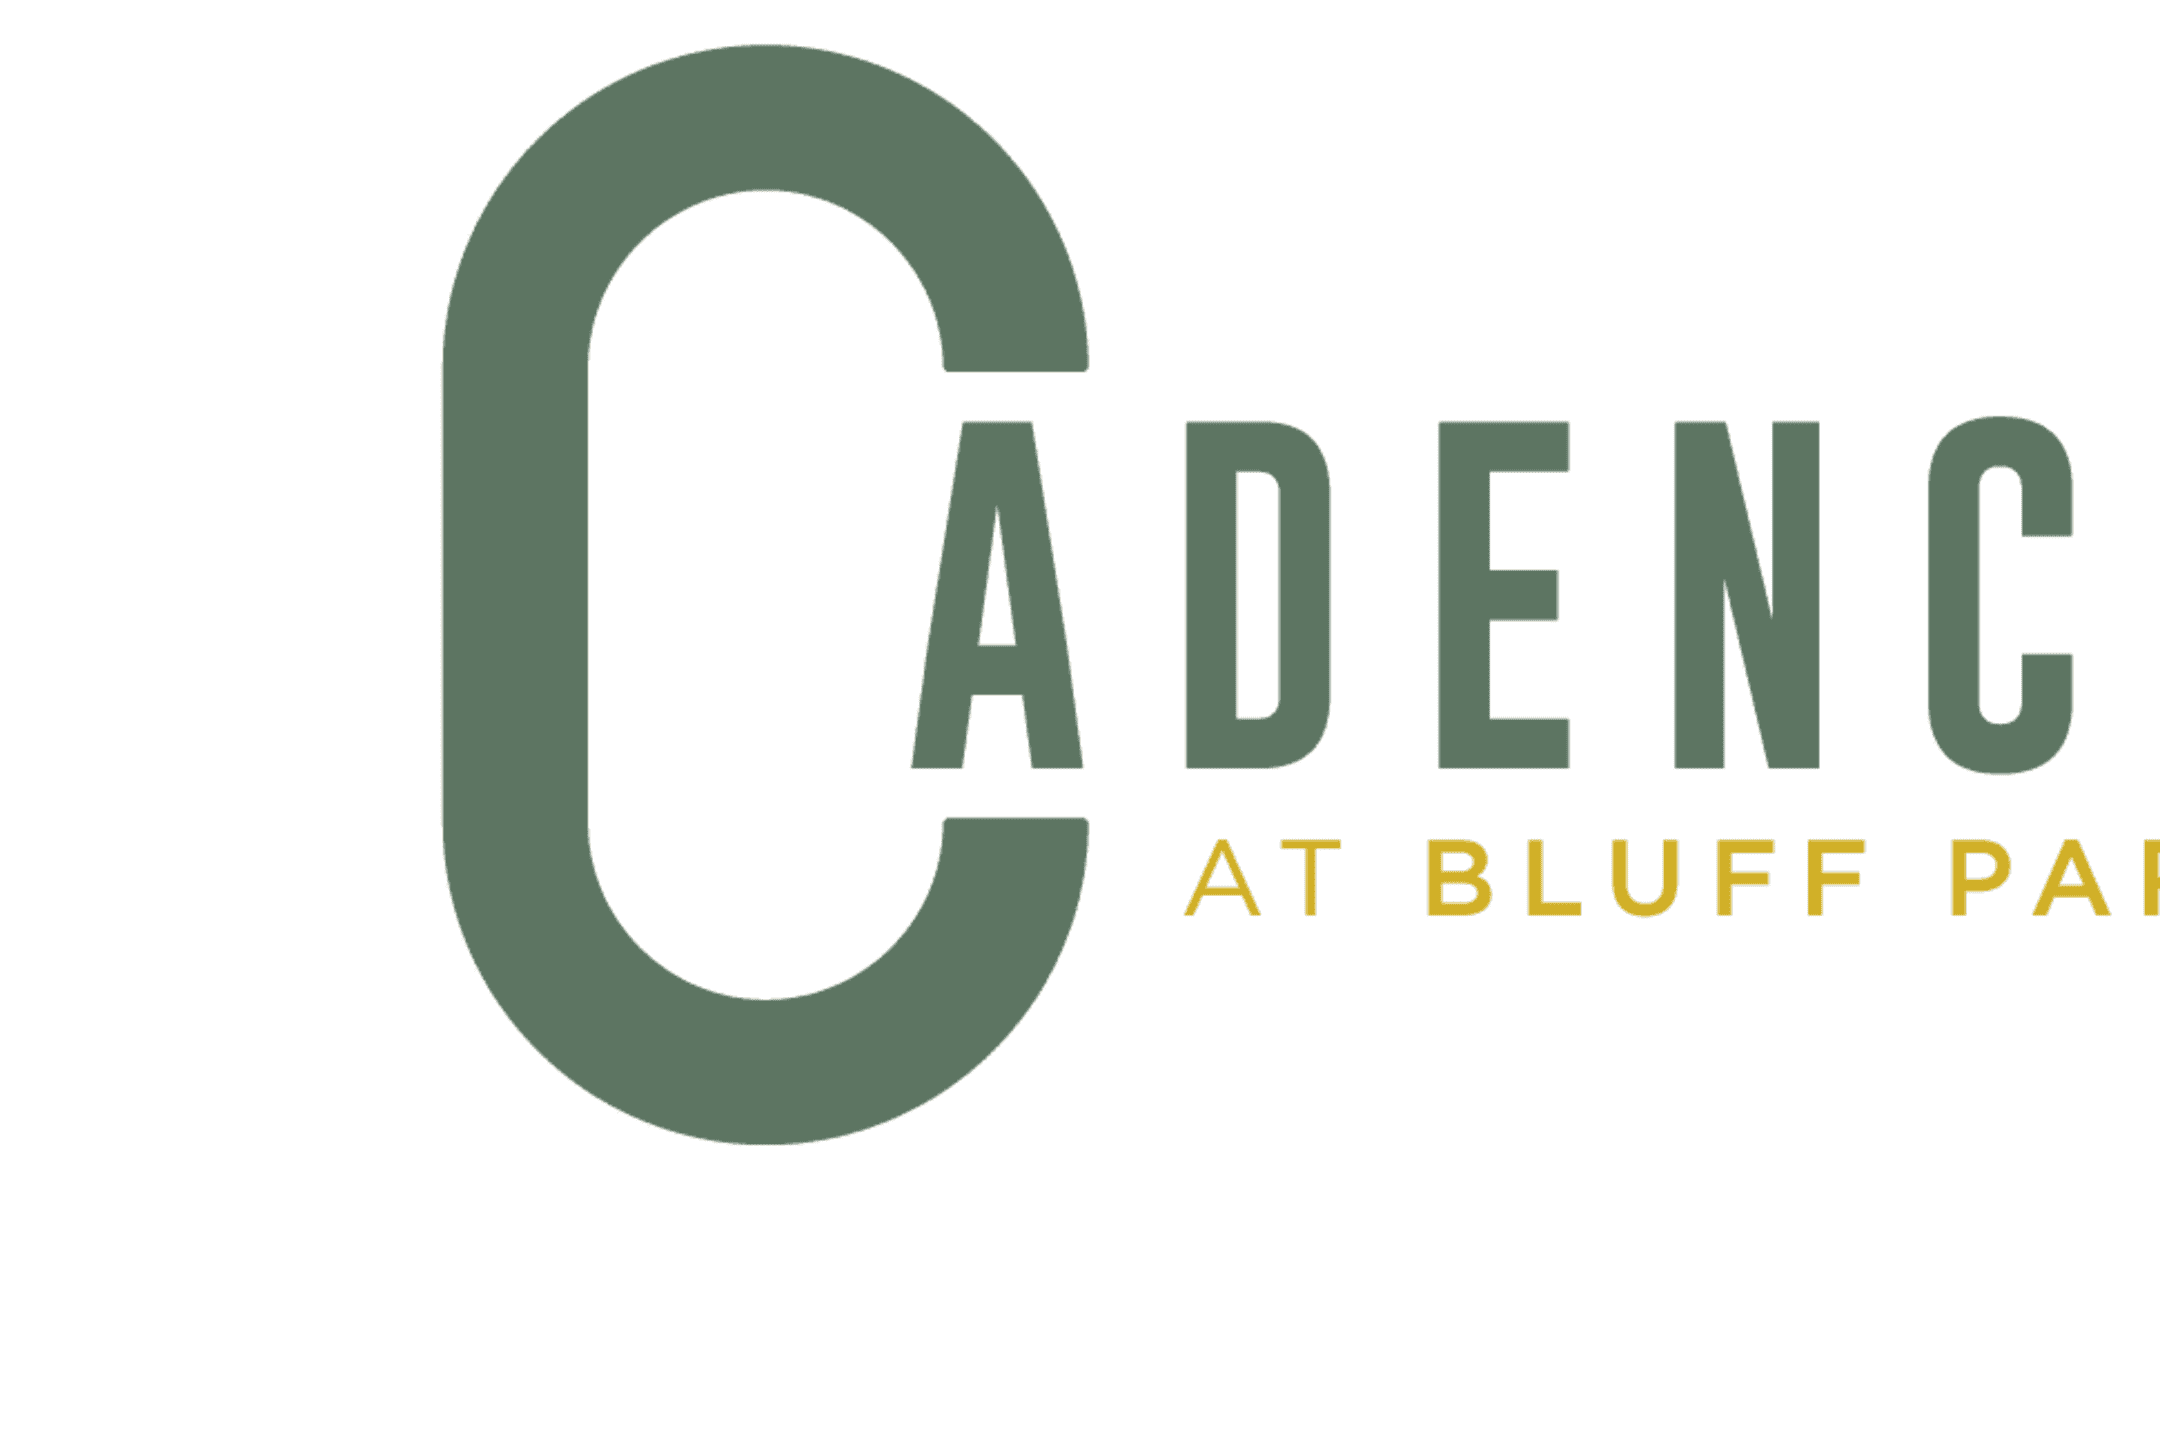 Cadence at Bluff Park - Hoover, AL